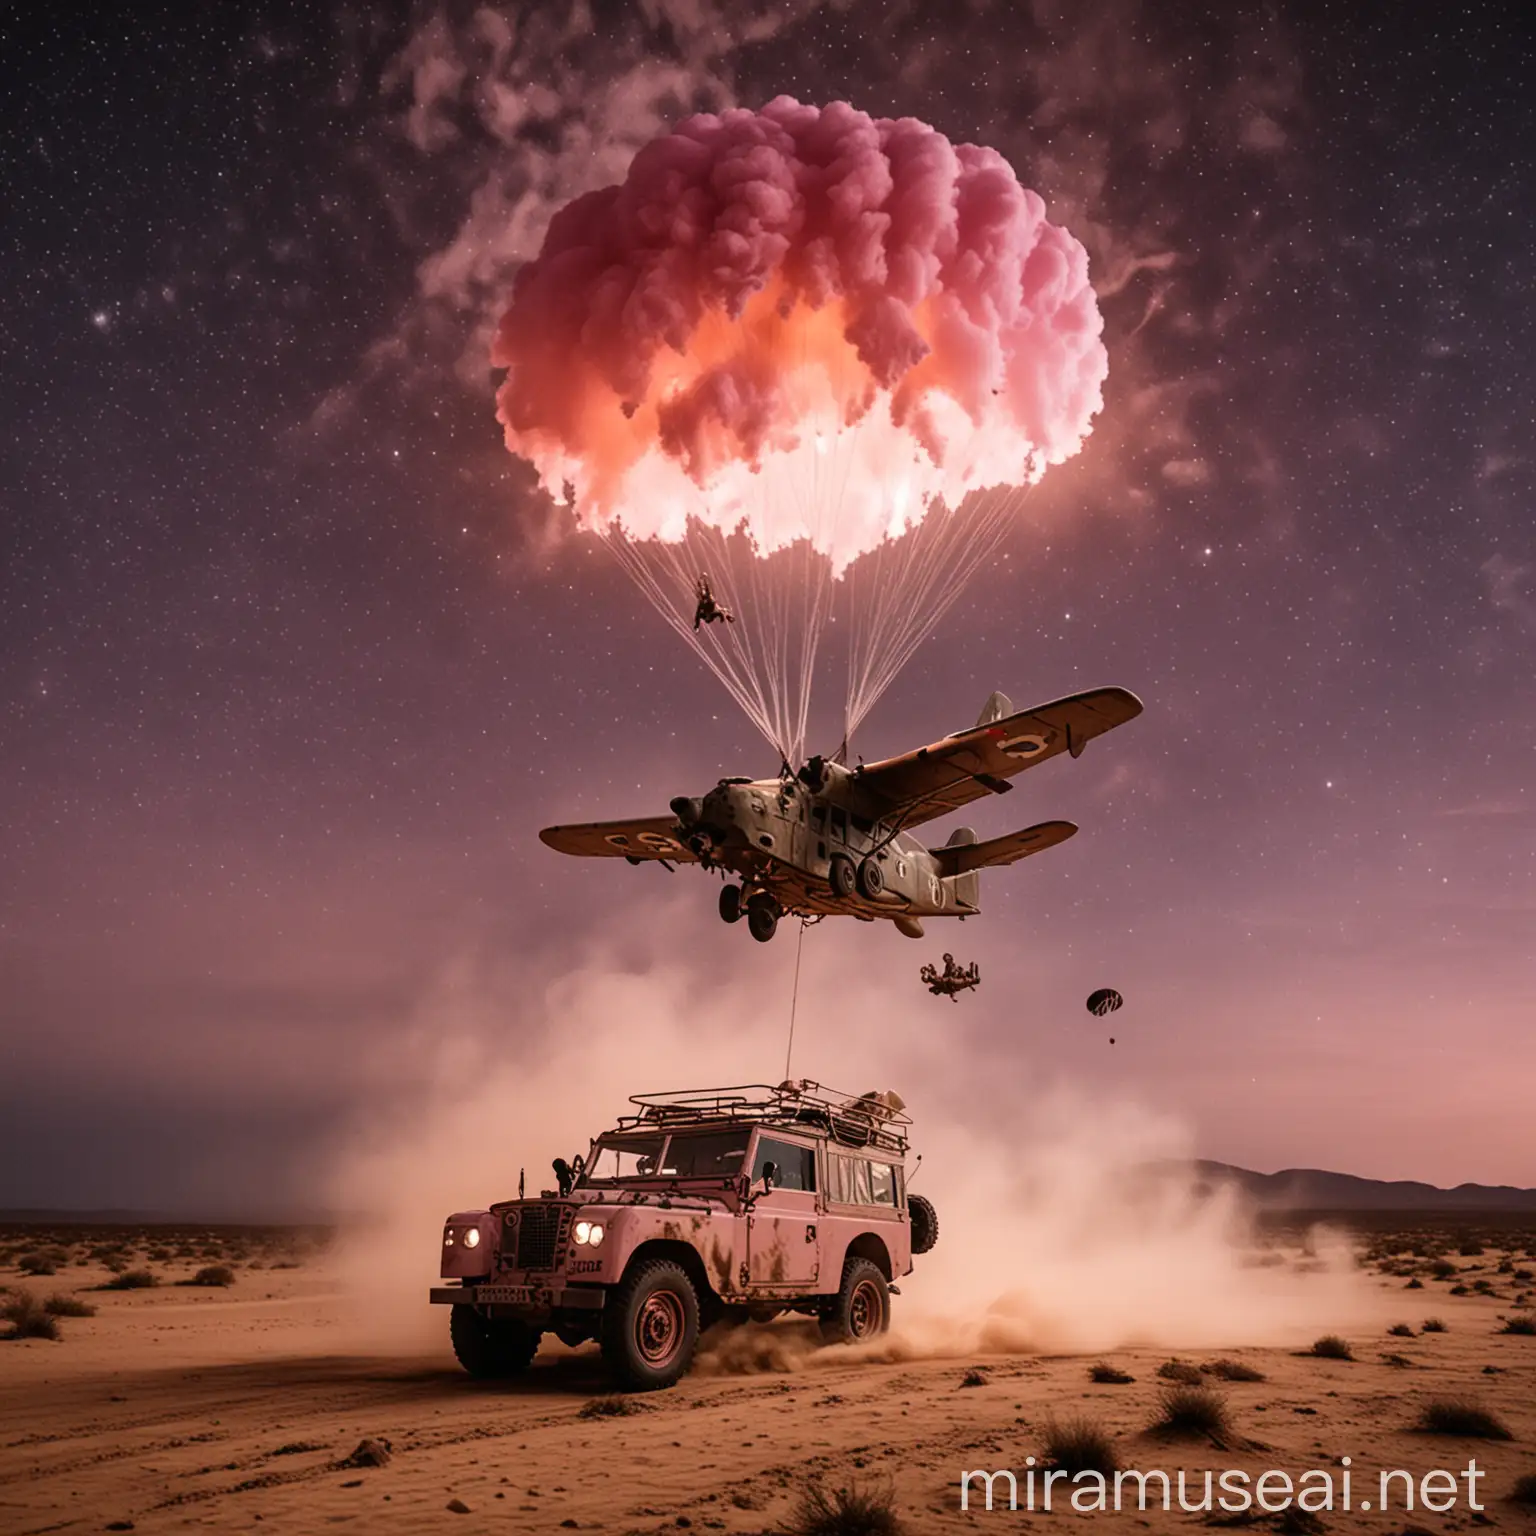 World War 2 Night Parachute Mission with Pink Fox Land Rover in Desert